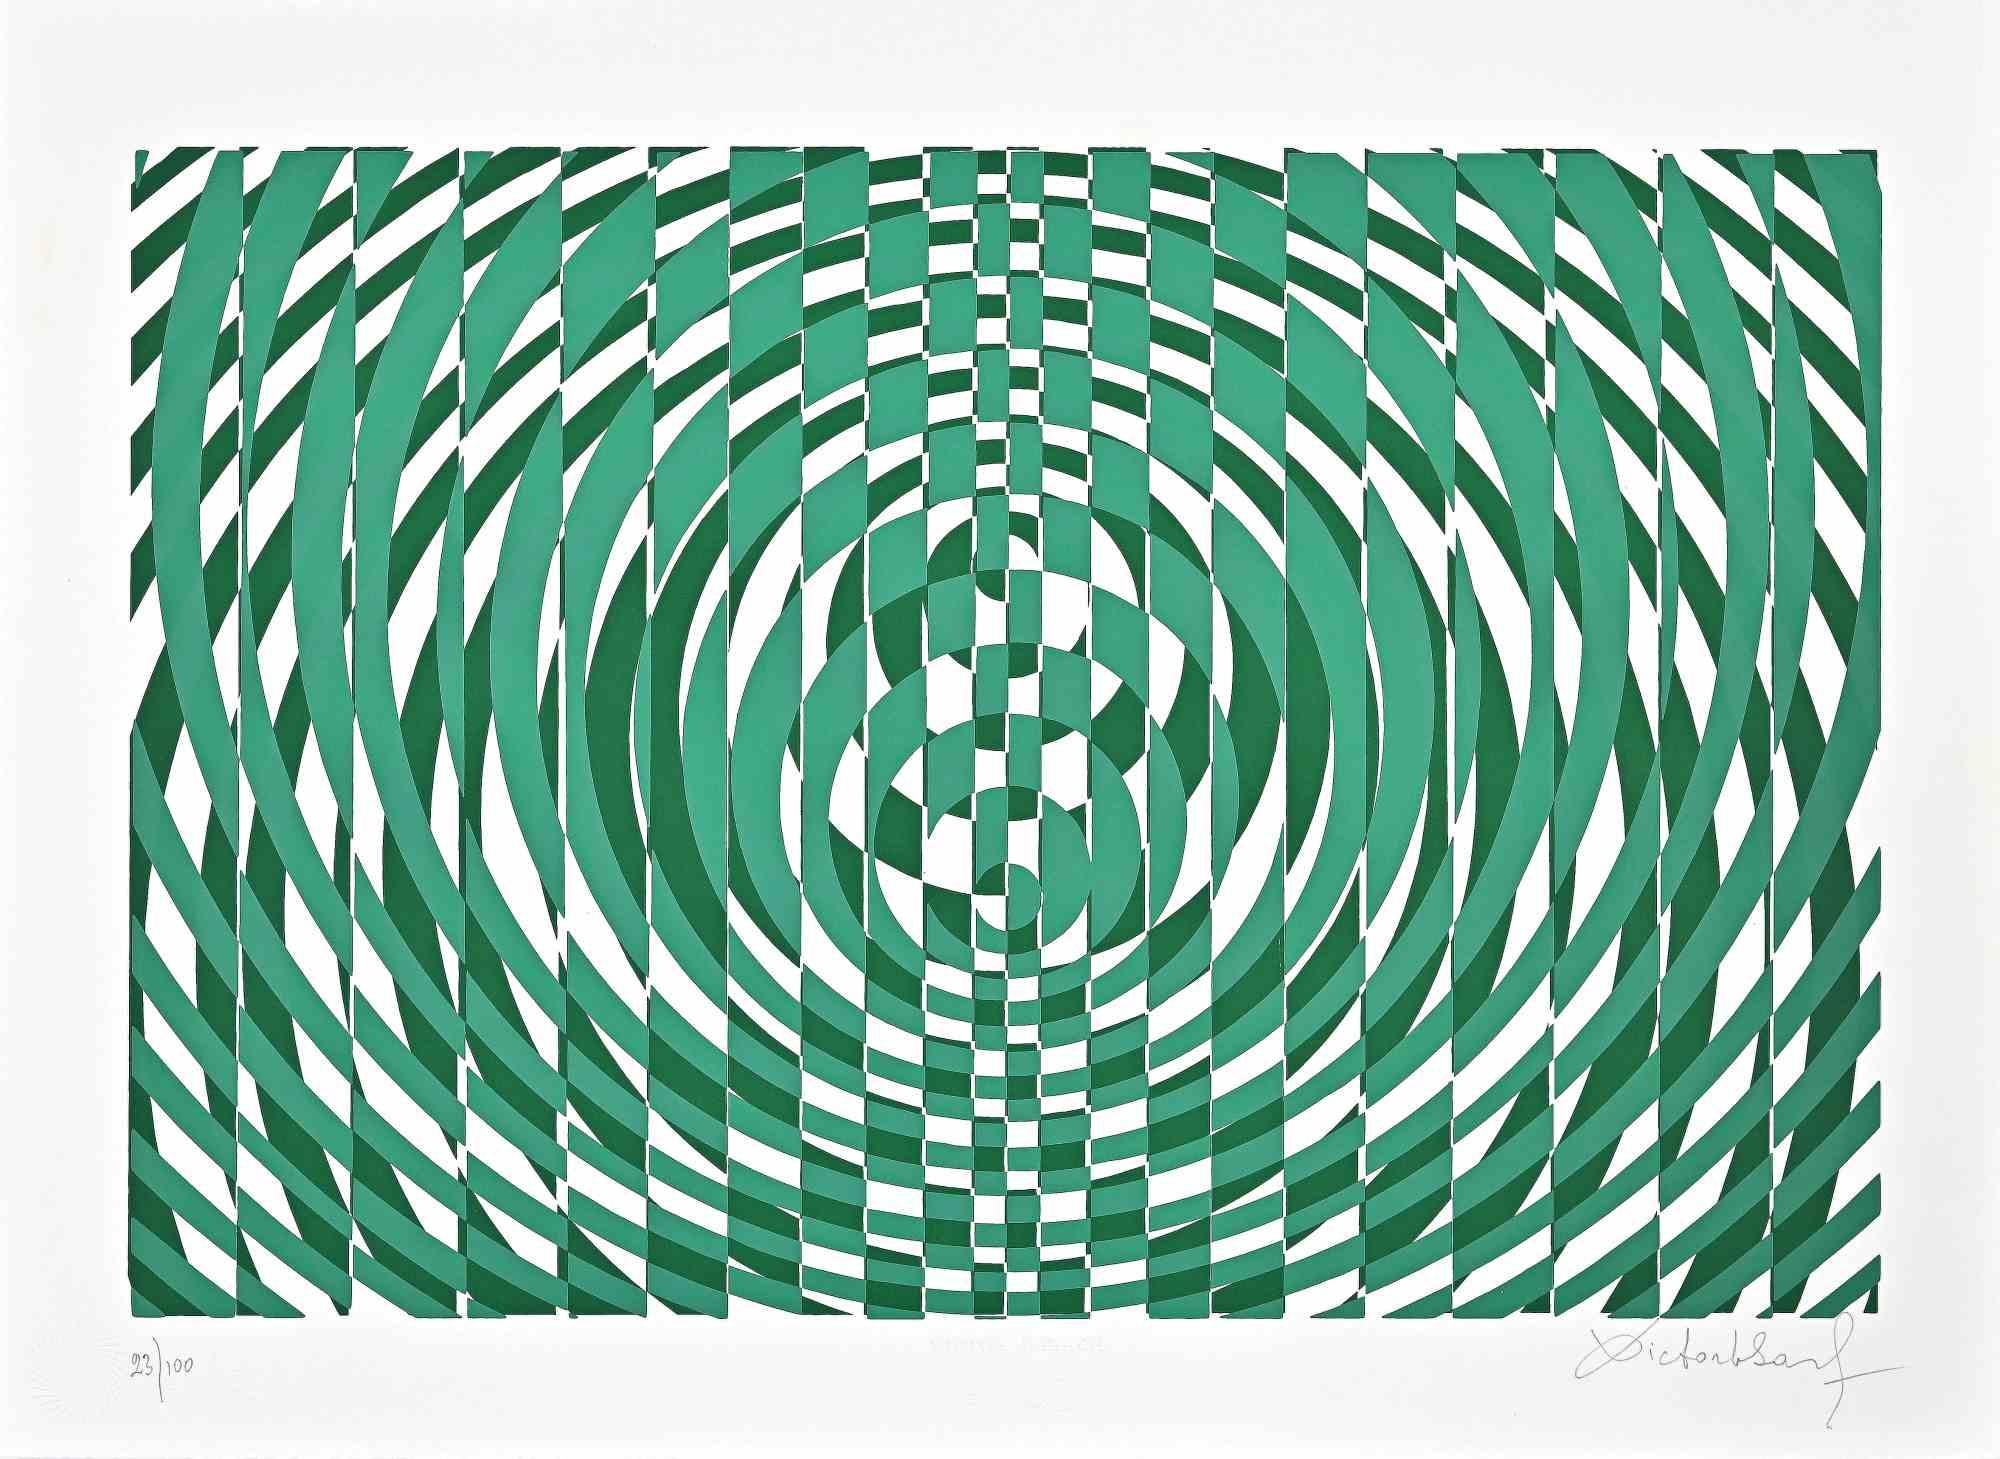 Victor Debach Abstract Print - Abstract Green Composition - Screen Print by V. Debach - 1970s